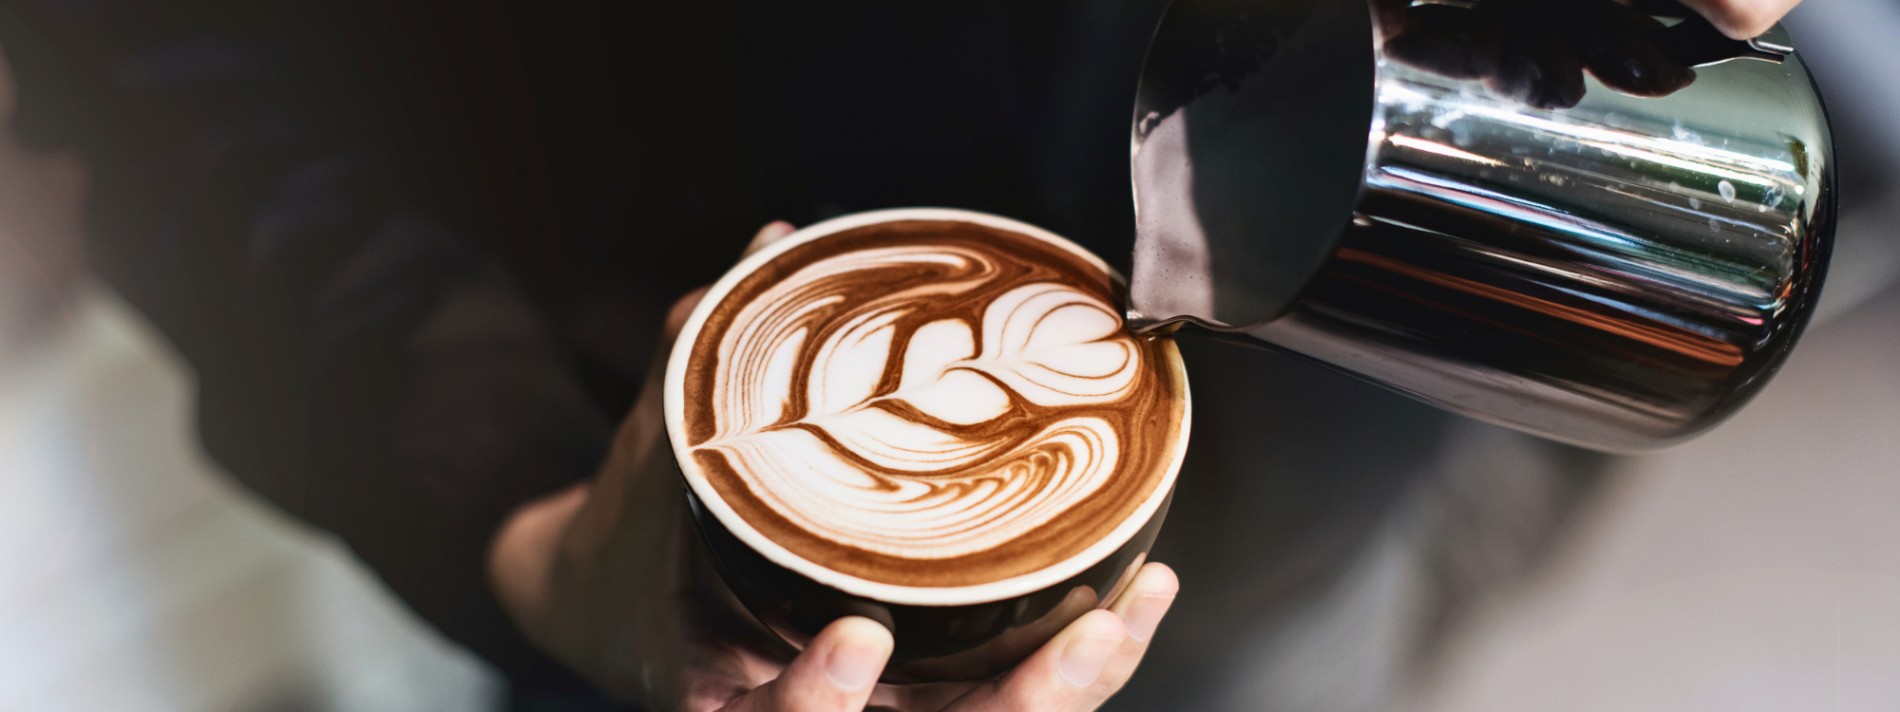 Creating Coffee Art with Love